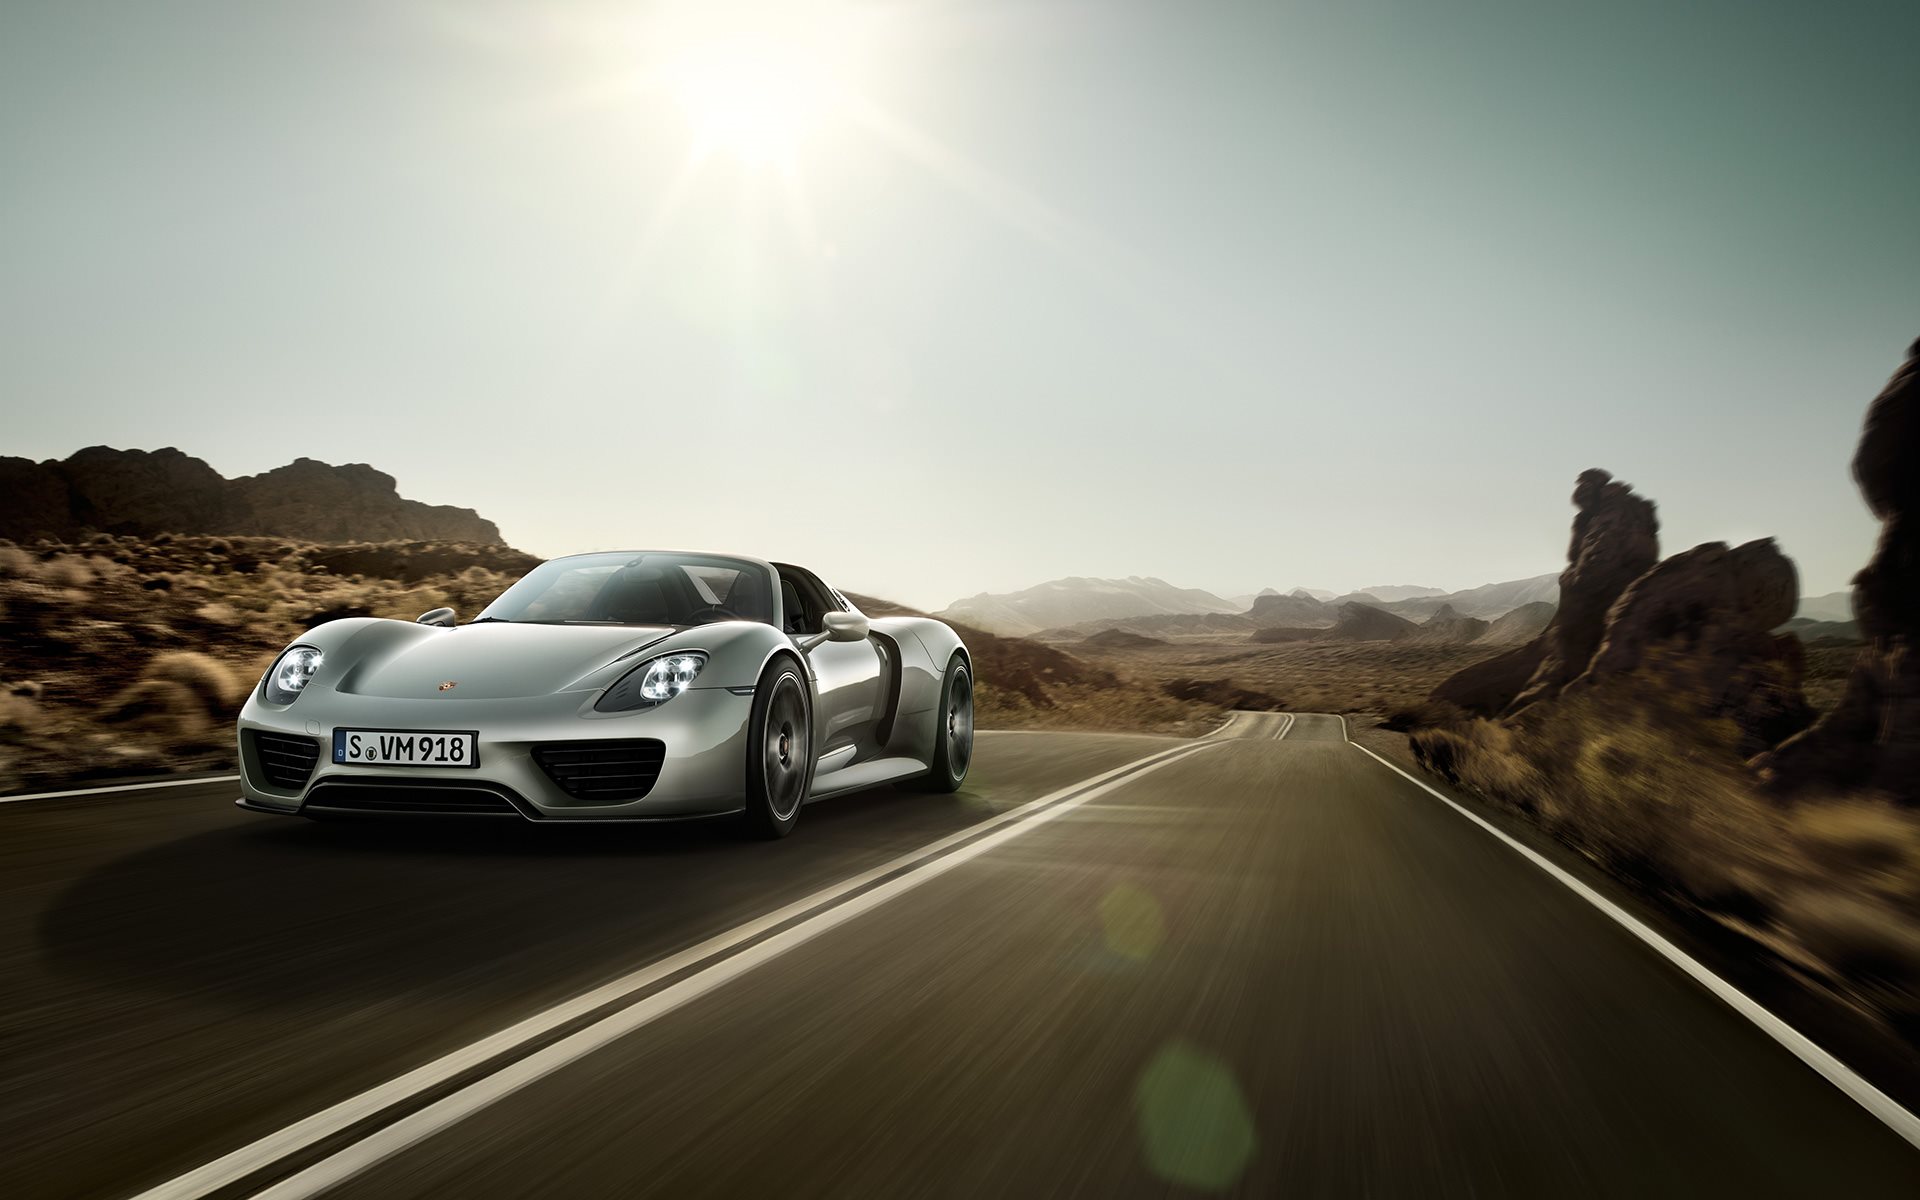 Porsche Full HD Wallpaper And Background